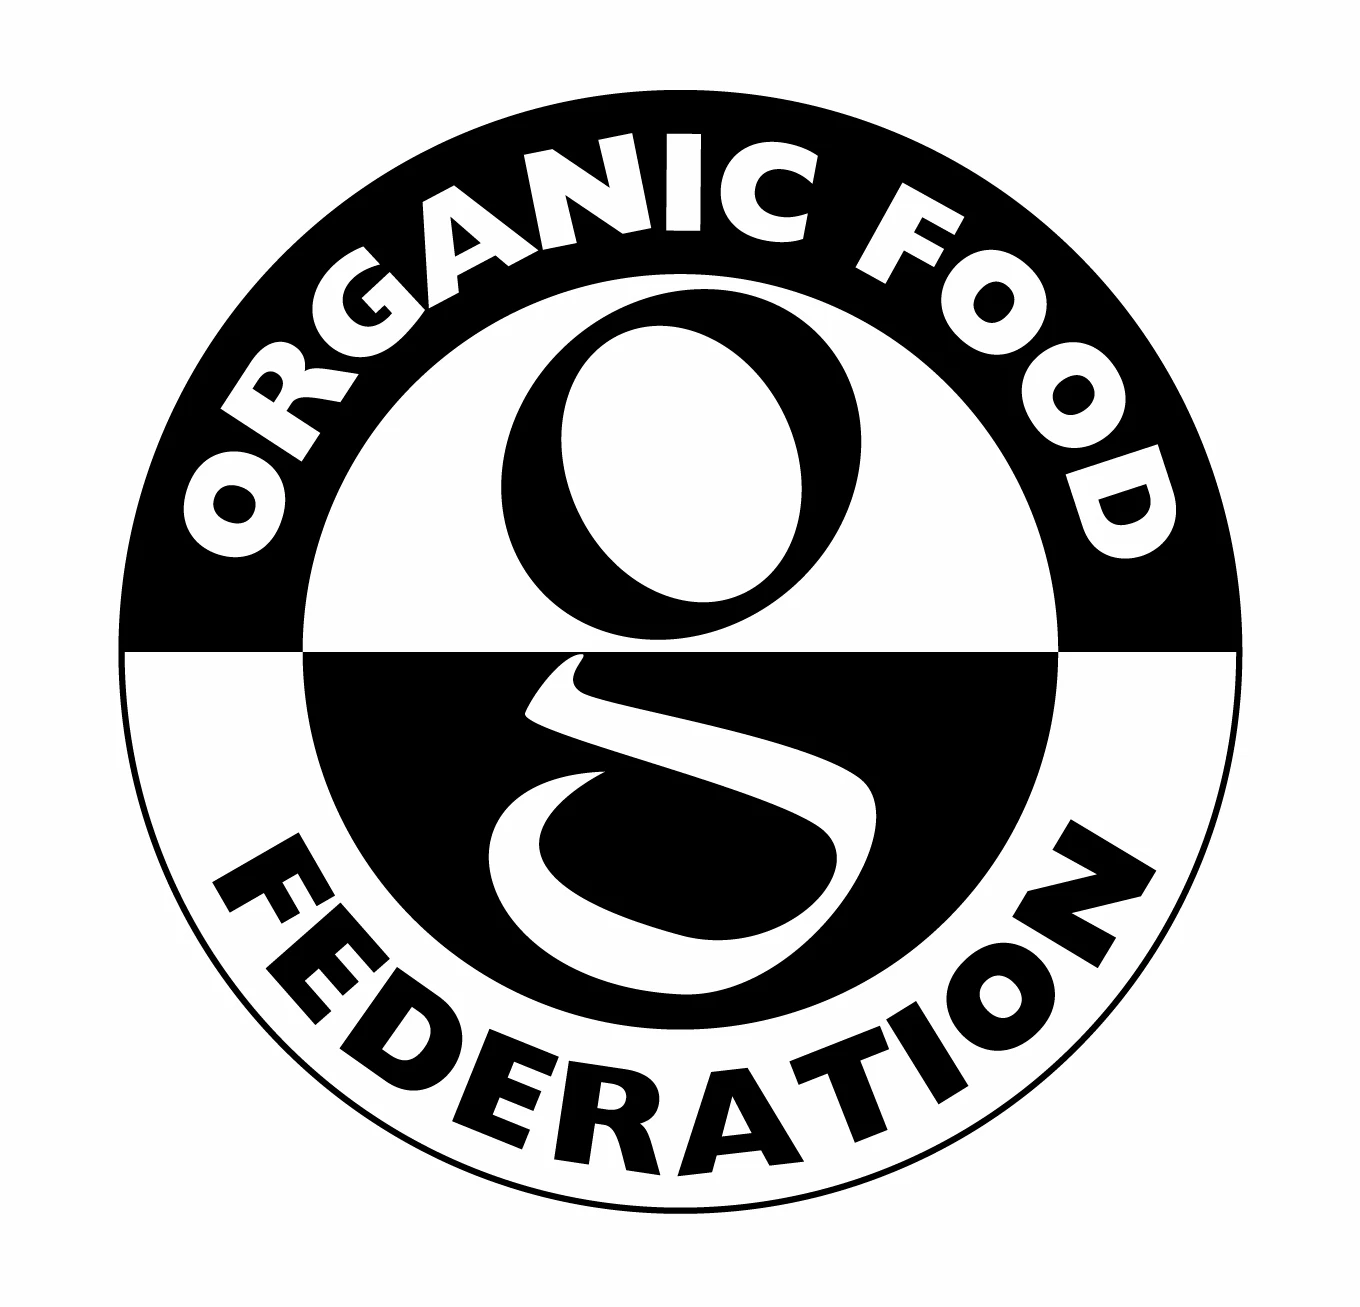 Steenberg Organic and Fairtrade Cinnamon Powder, 40g